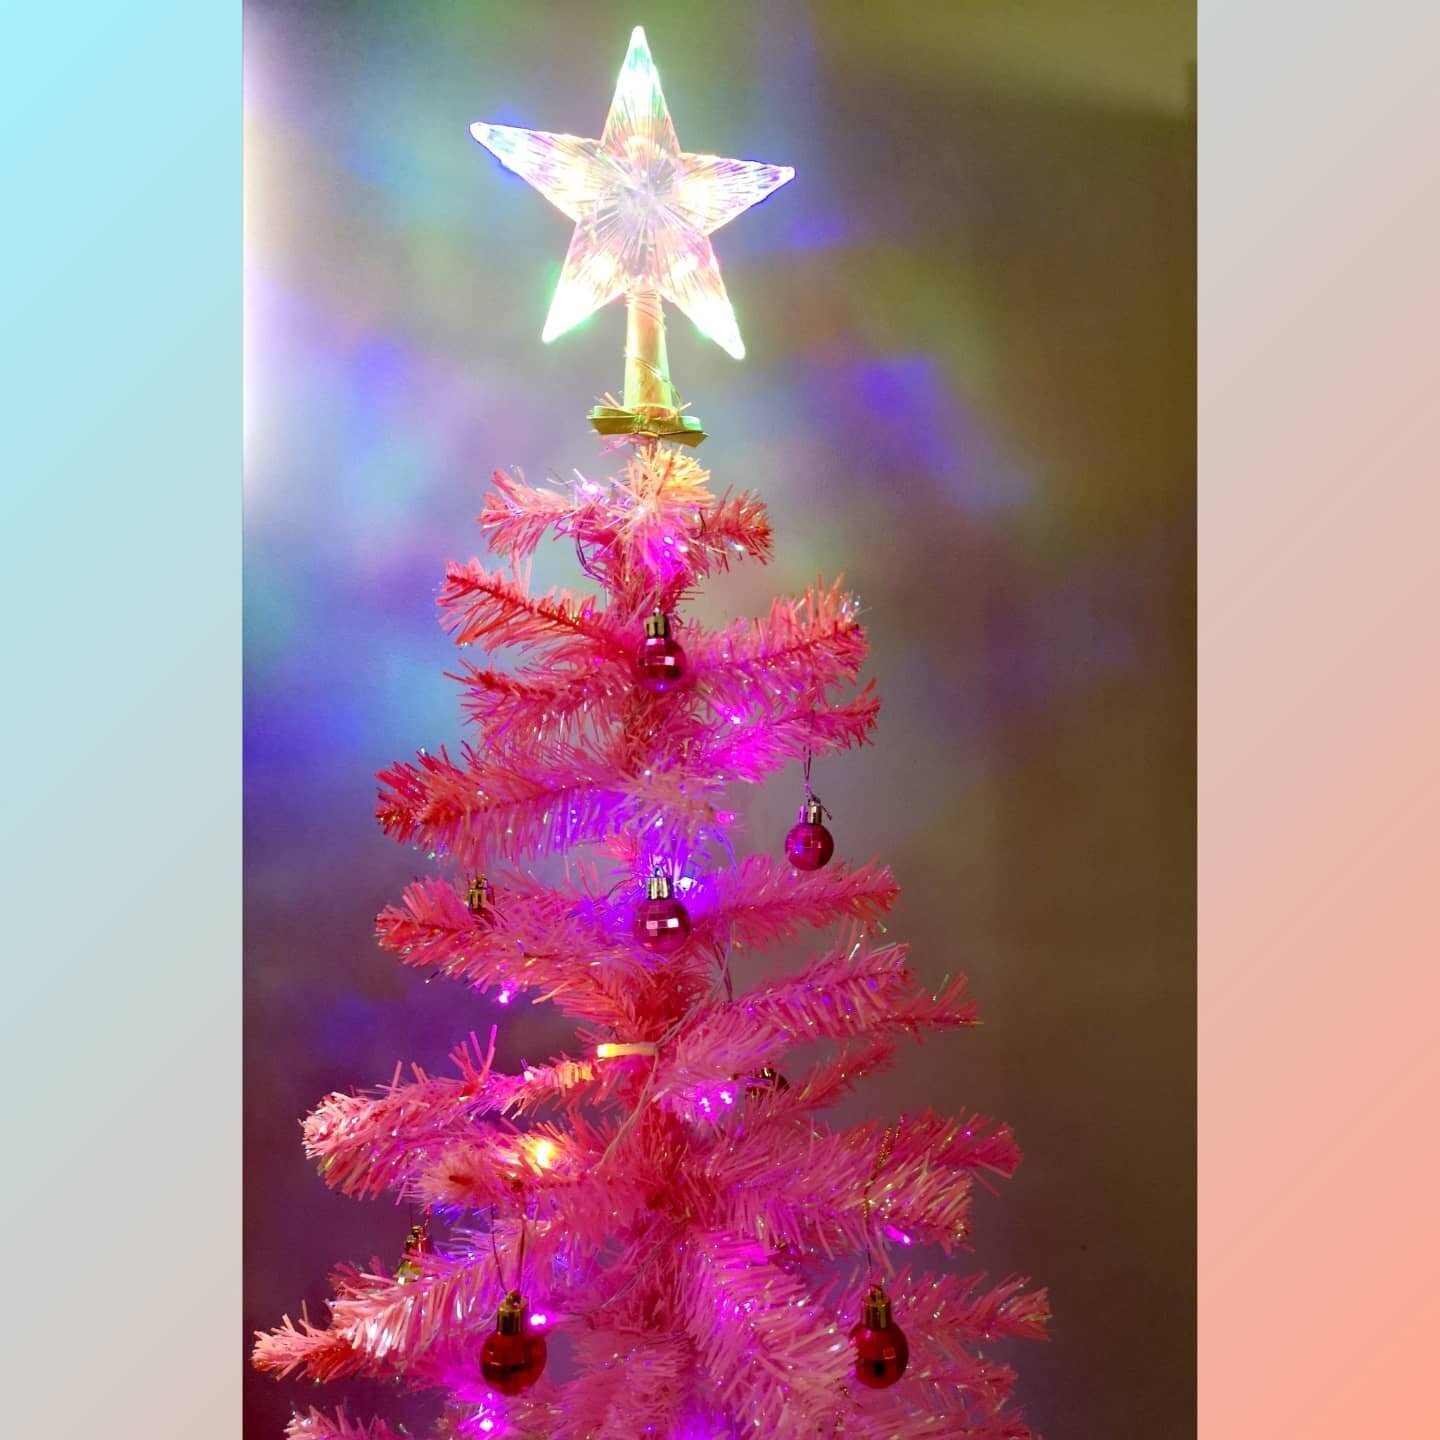 Petunia the Christmas tree is looking sparkly in the studio
.
.
.
#Christmas #christmastree #pinktree #pink #dancestudio #christmaslights